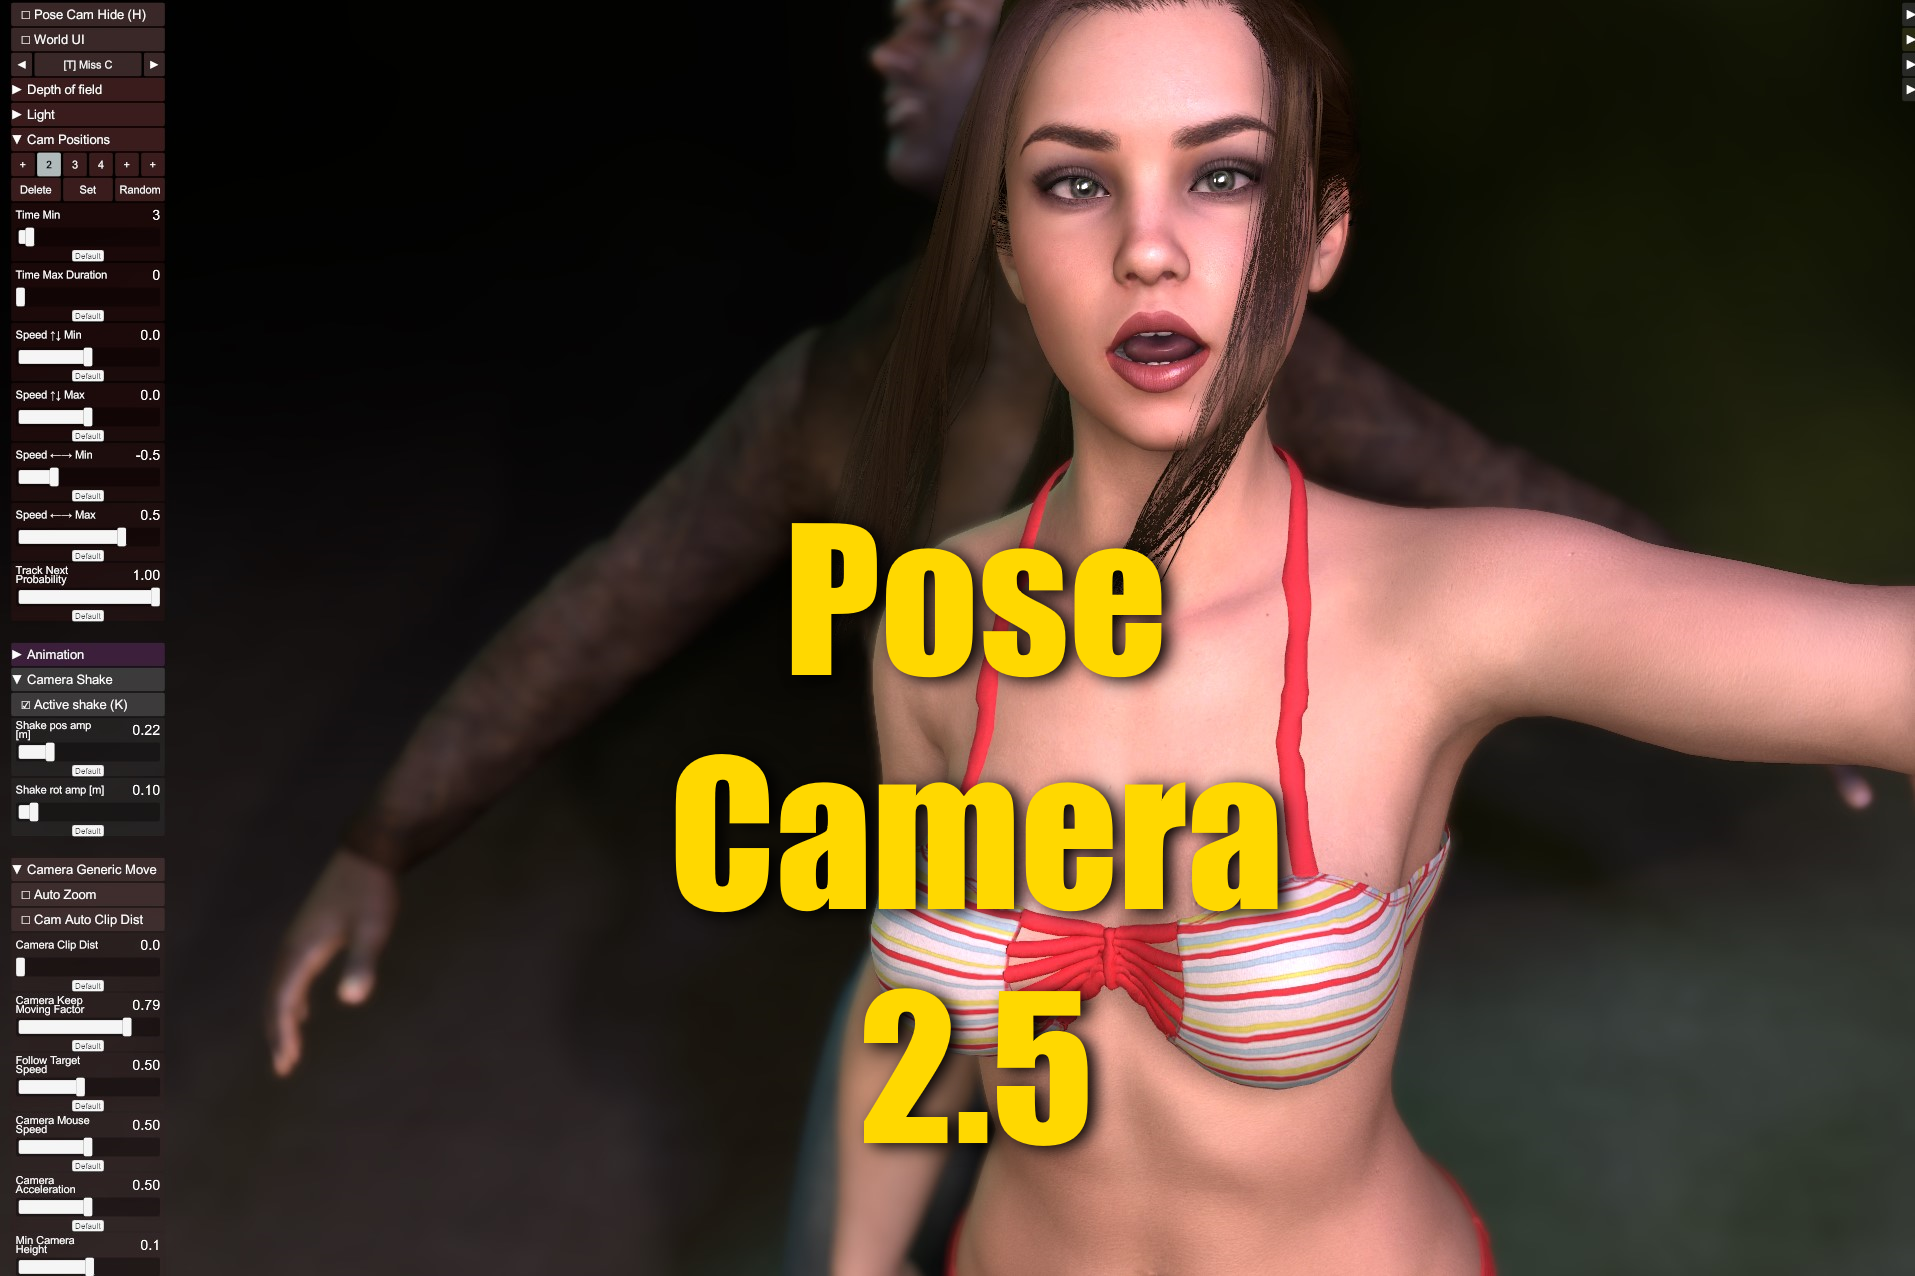 Pose-Camera-2.5.png